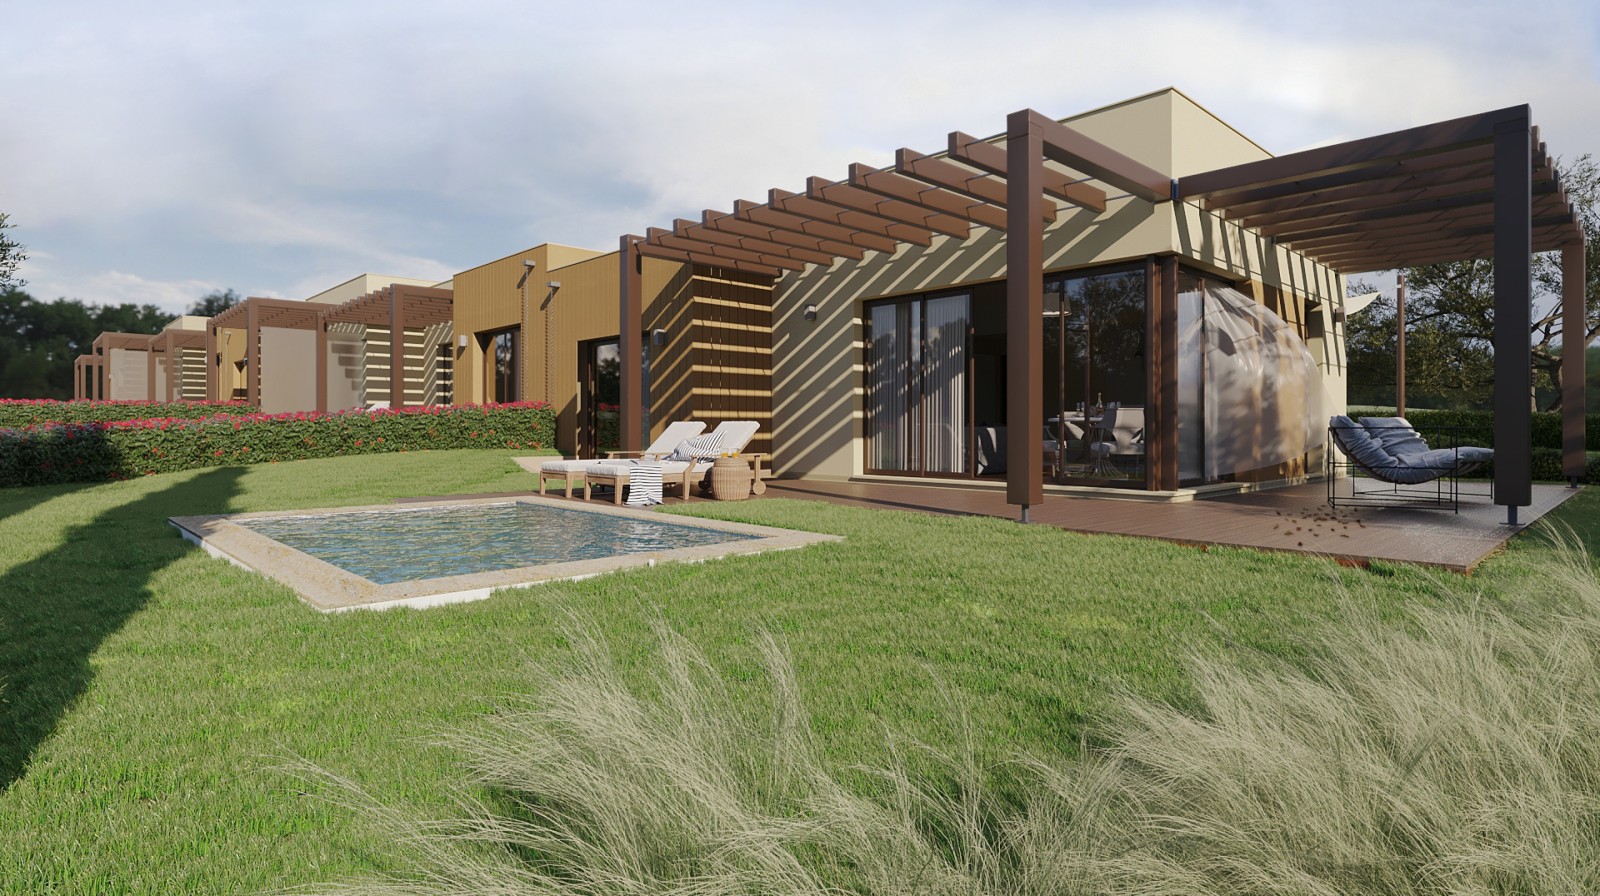 2 bedroom semi-detached villa with swimming pool for sale in Golf resort, Algarve_218814